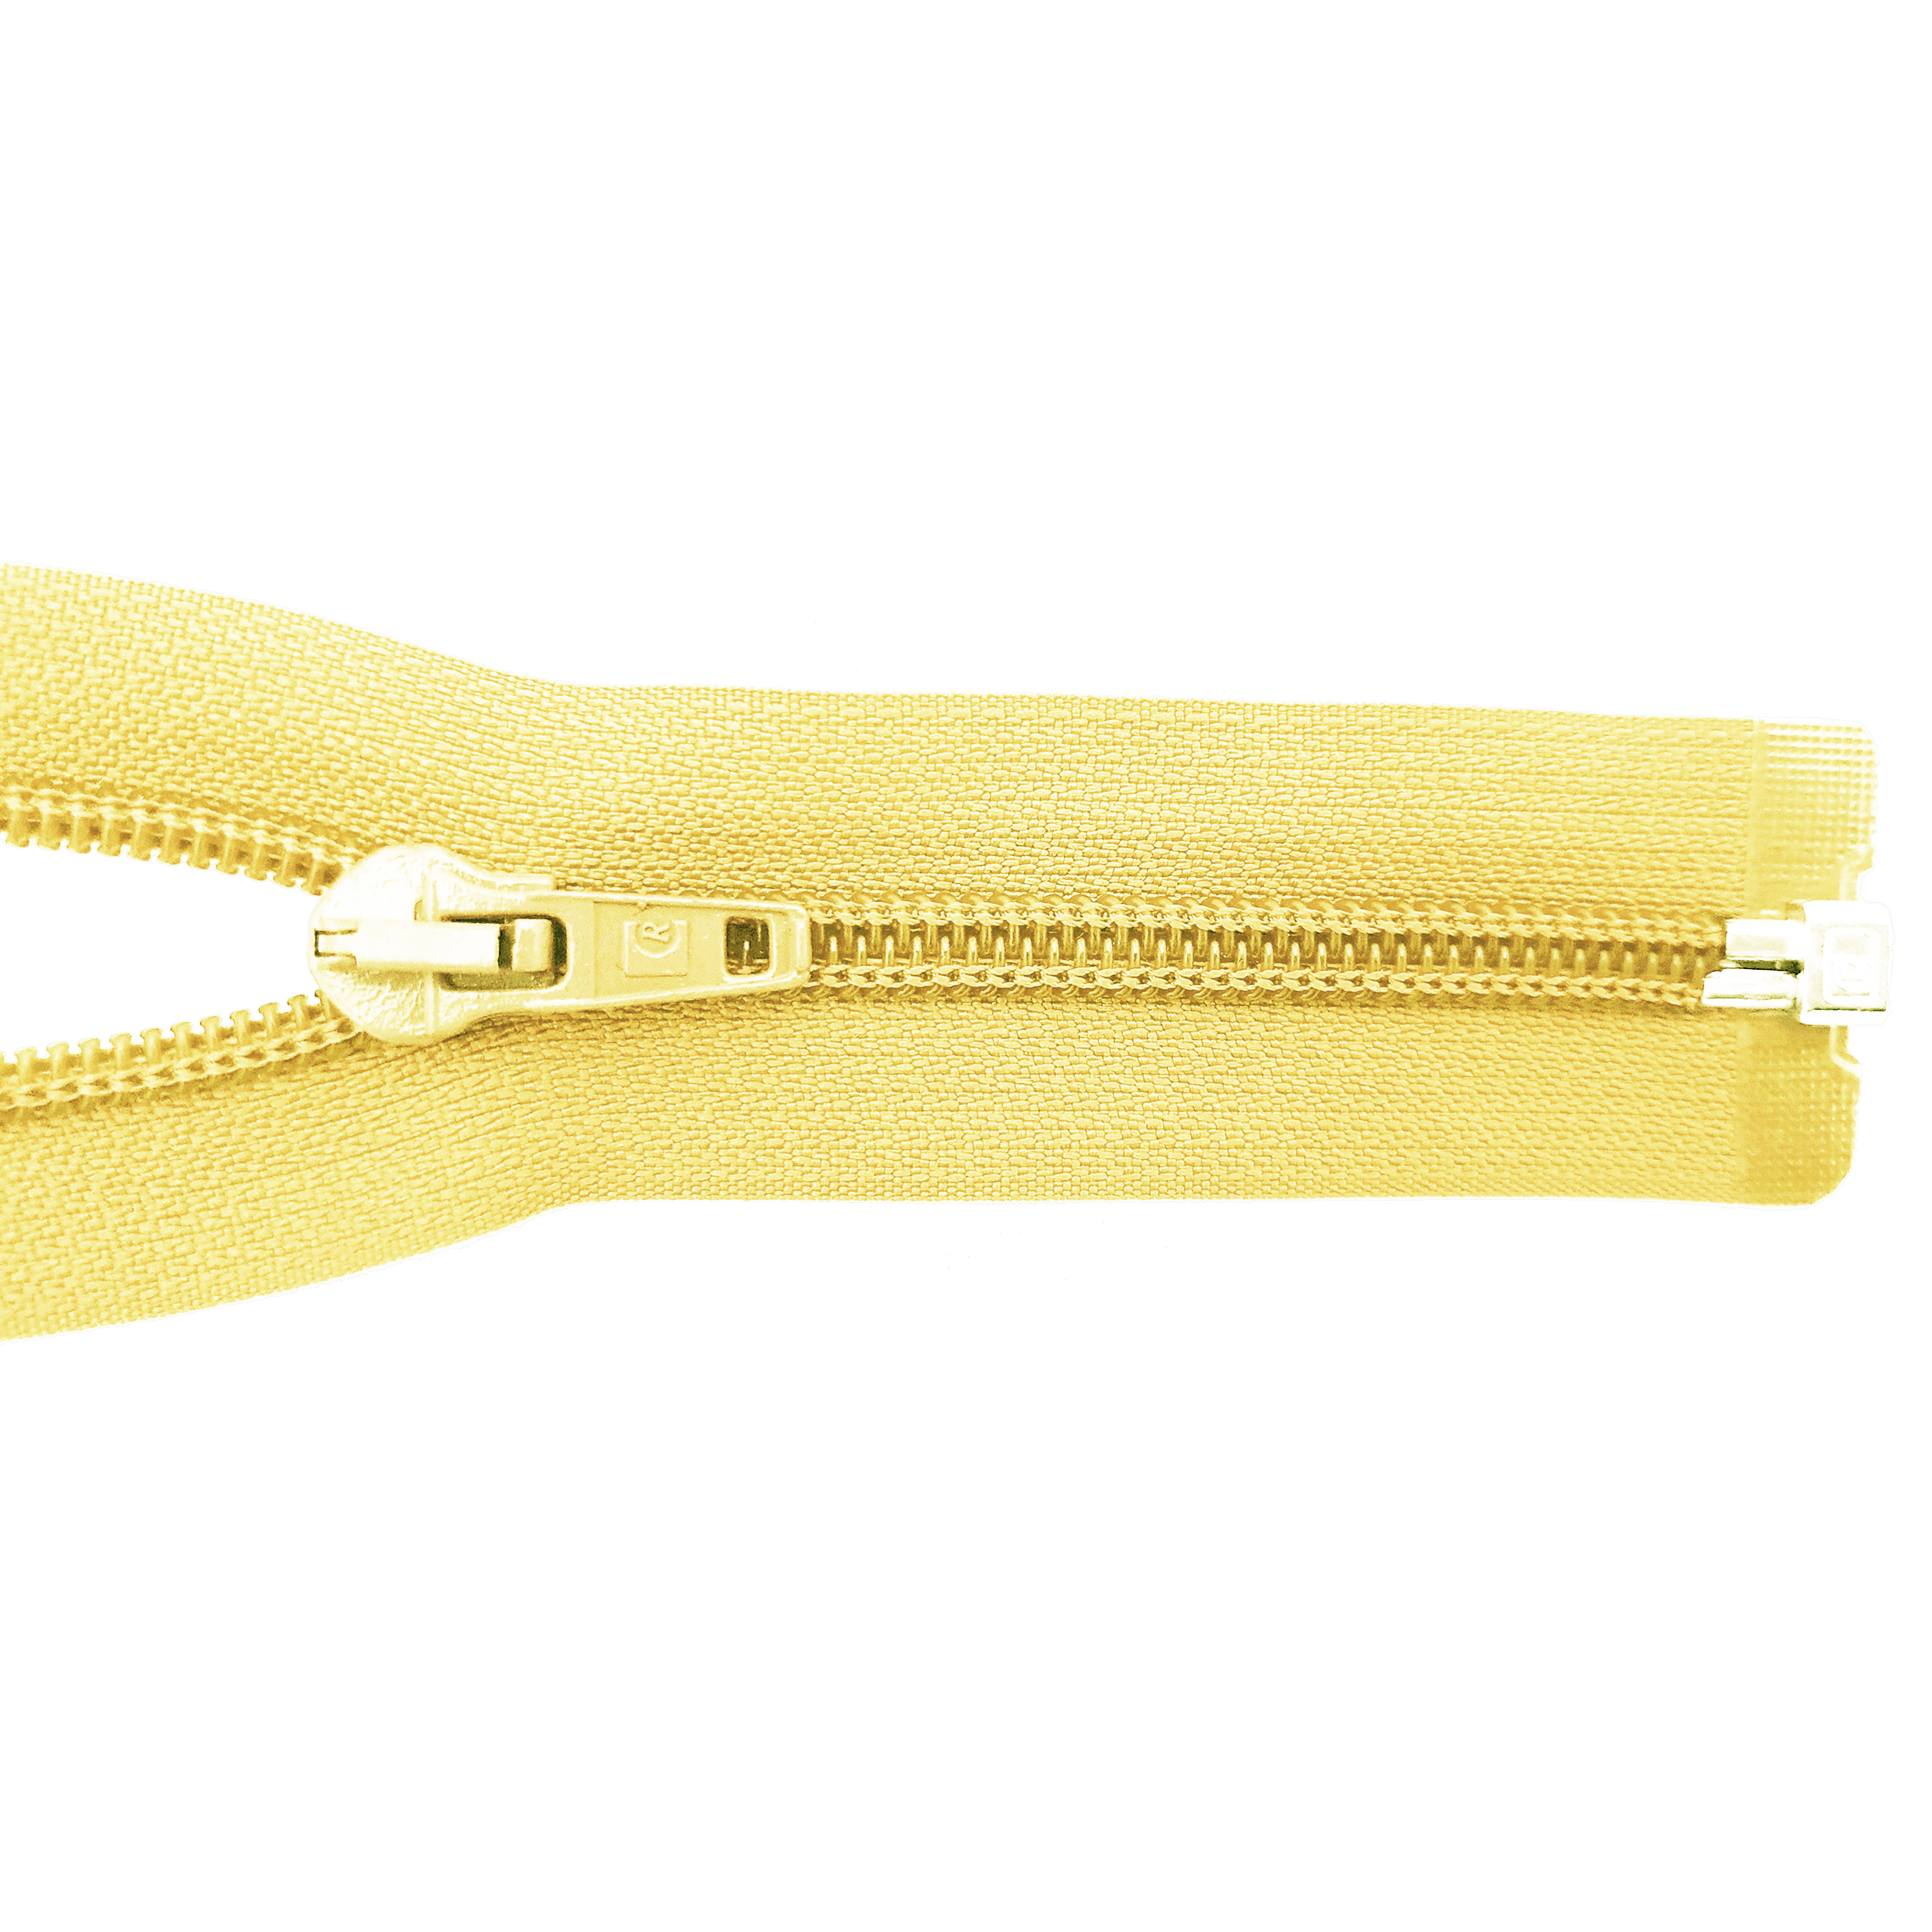 zipper 80cm,divisible, PES spiral, wide, light yellow